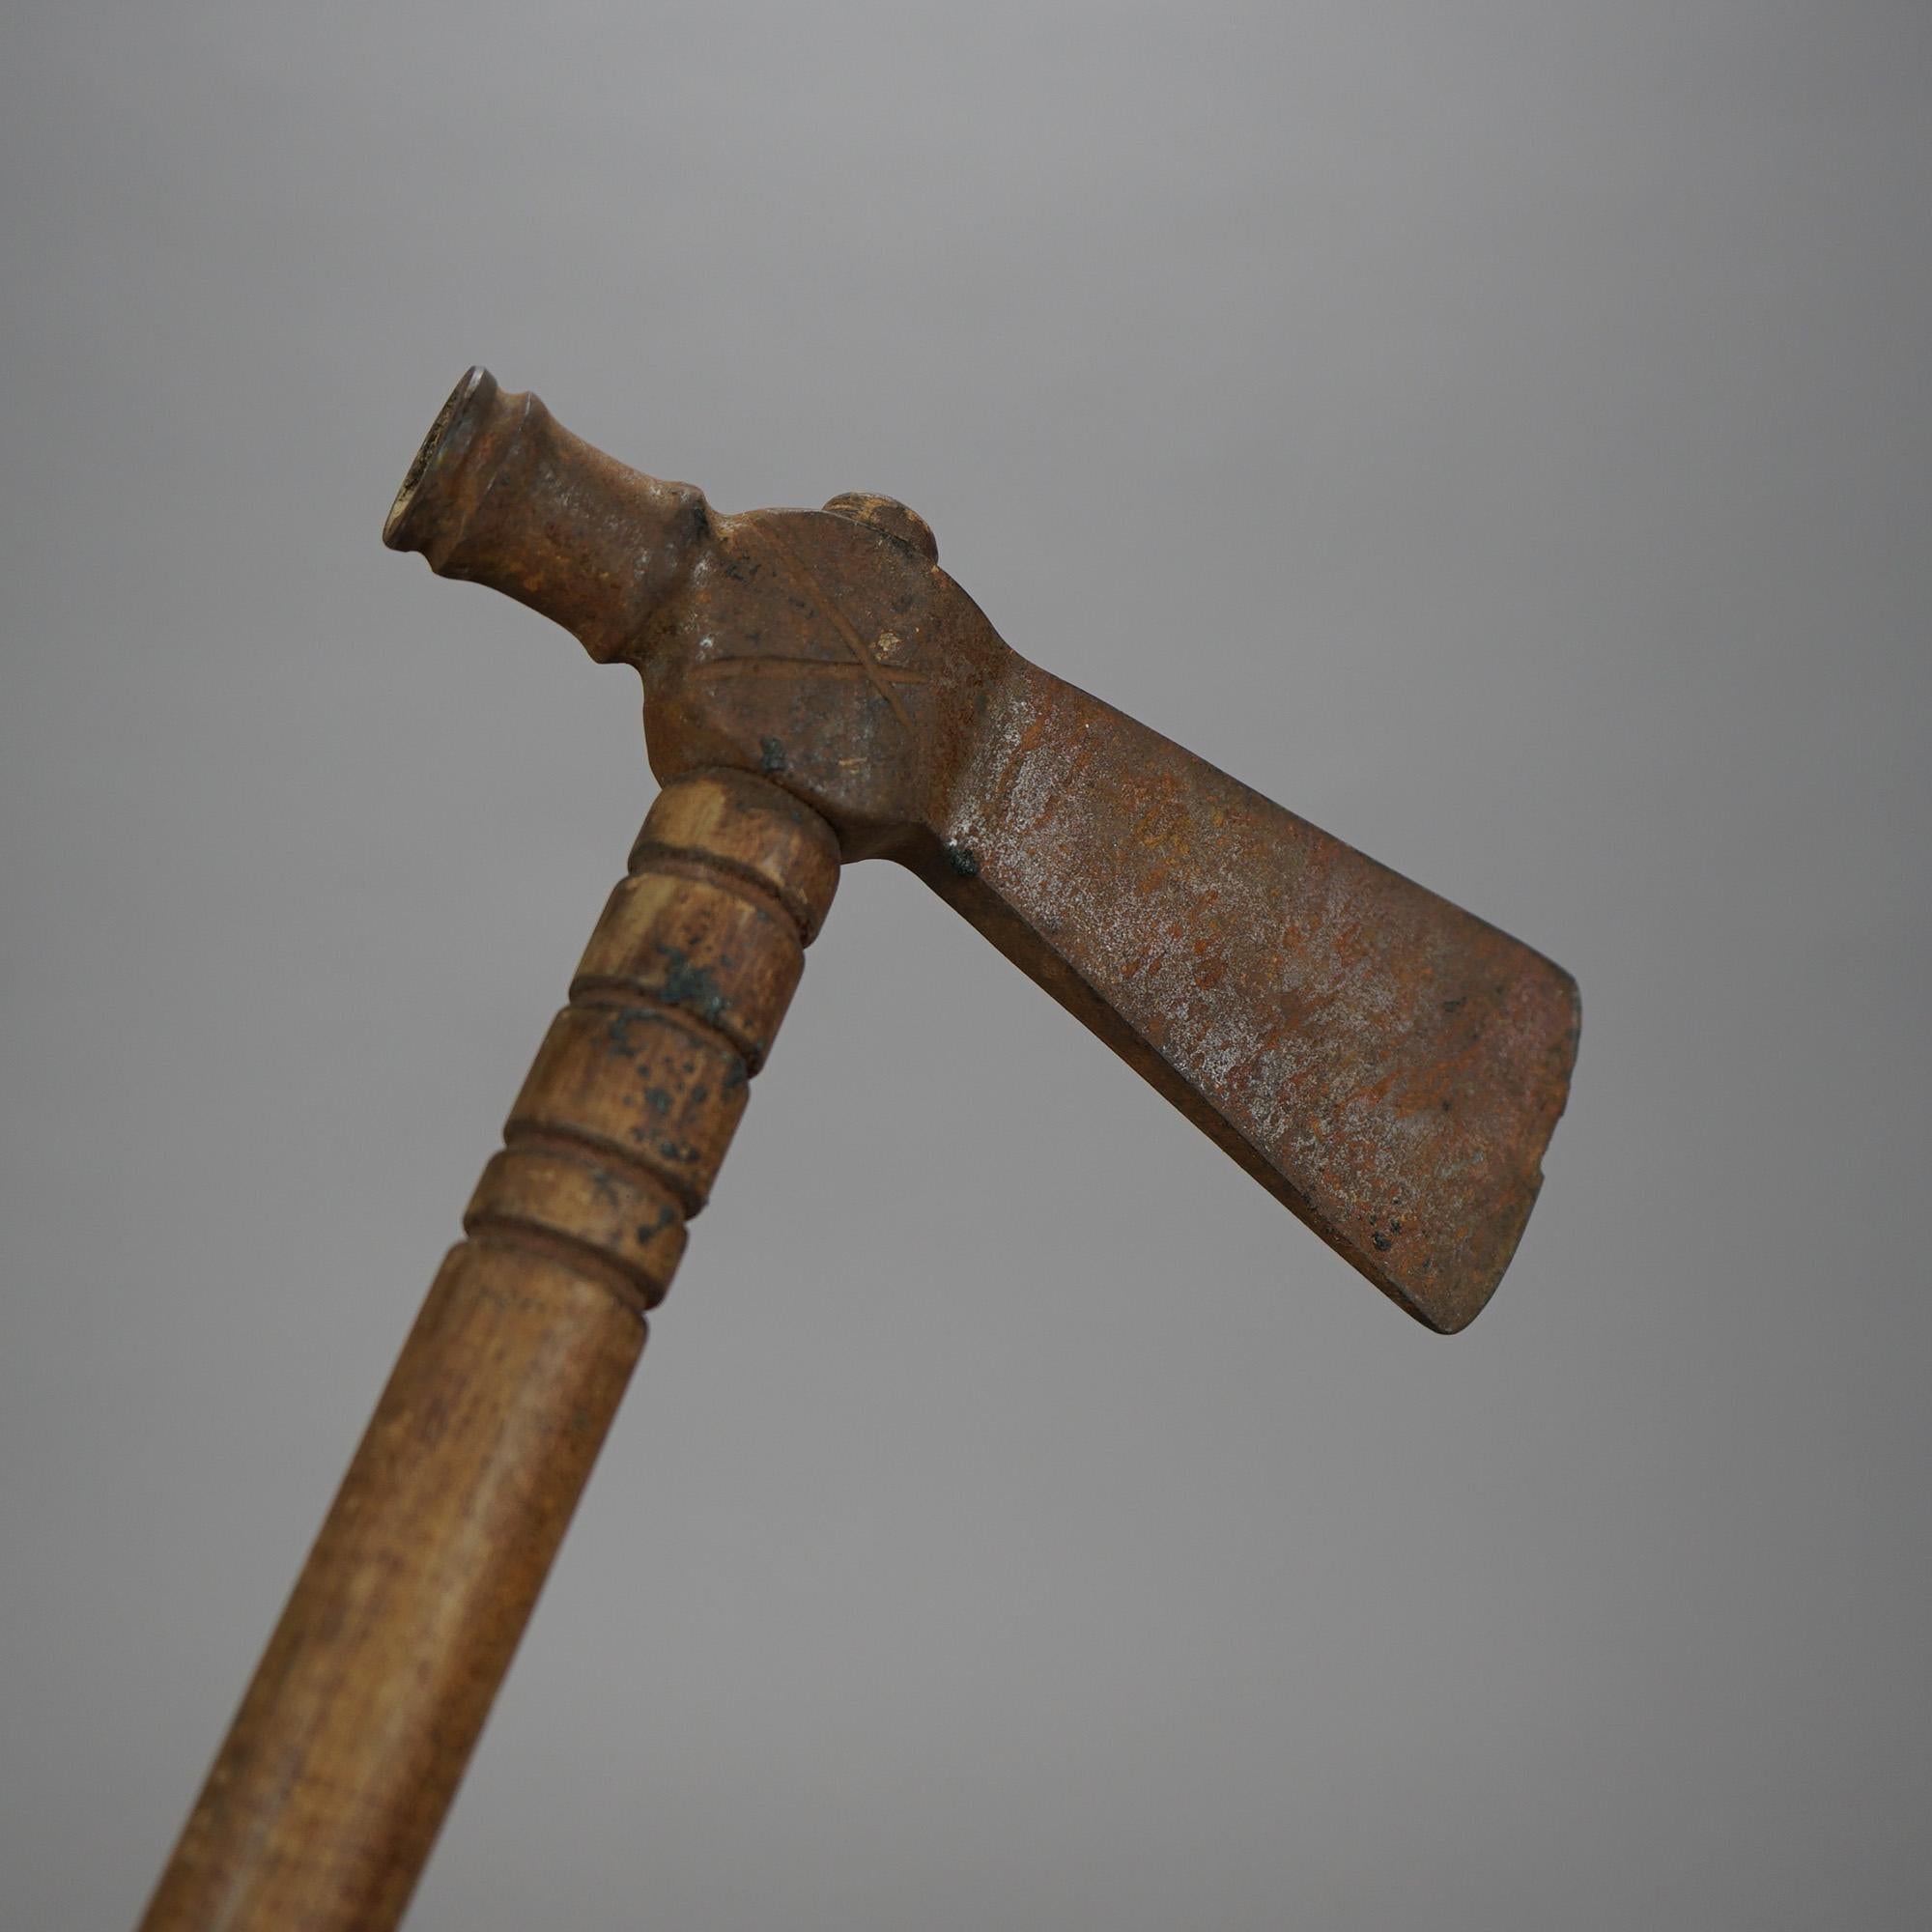 18th century pipe tomahawk